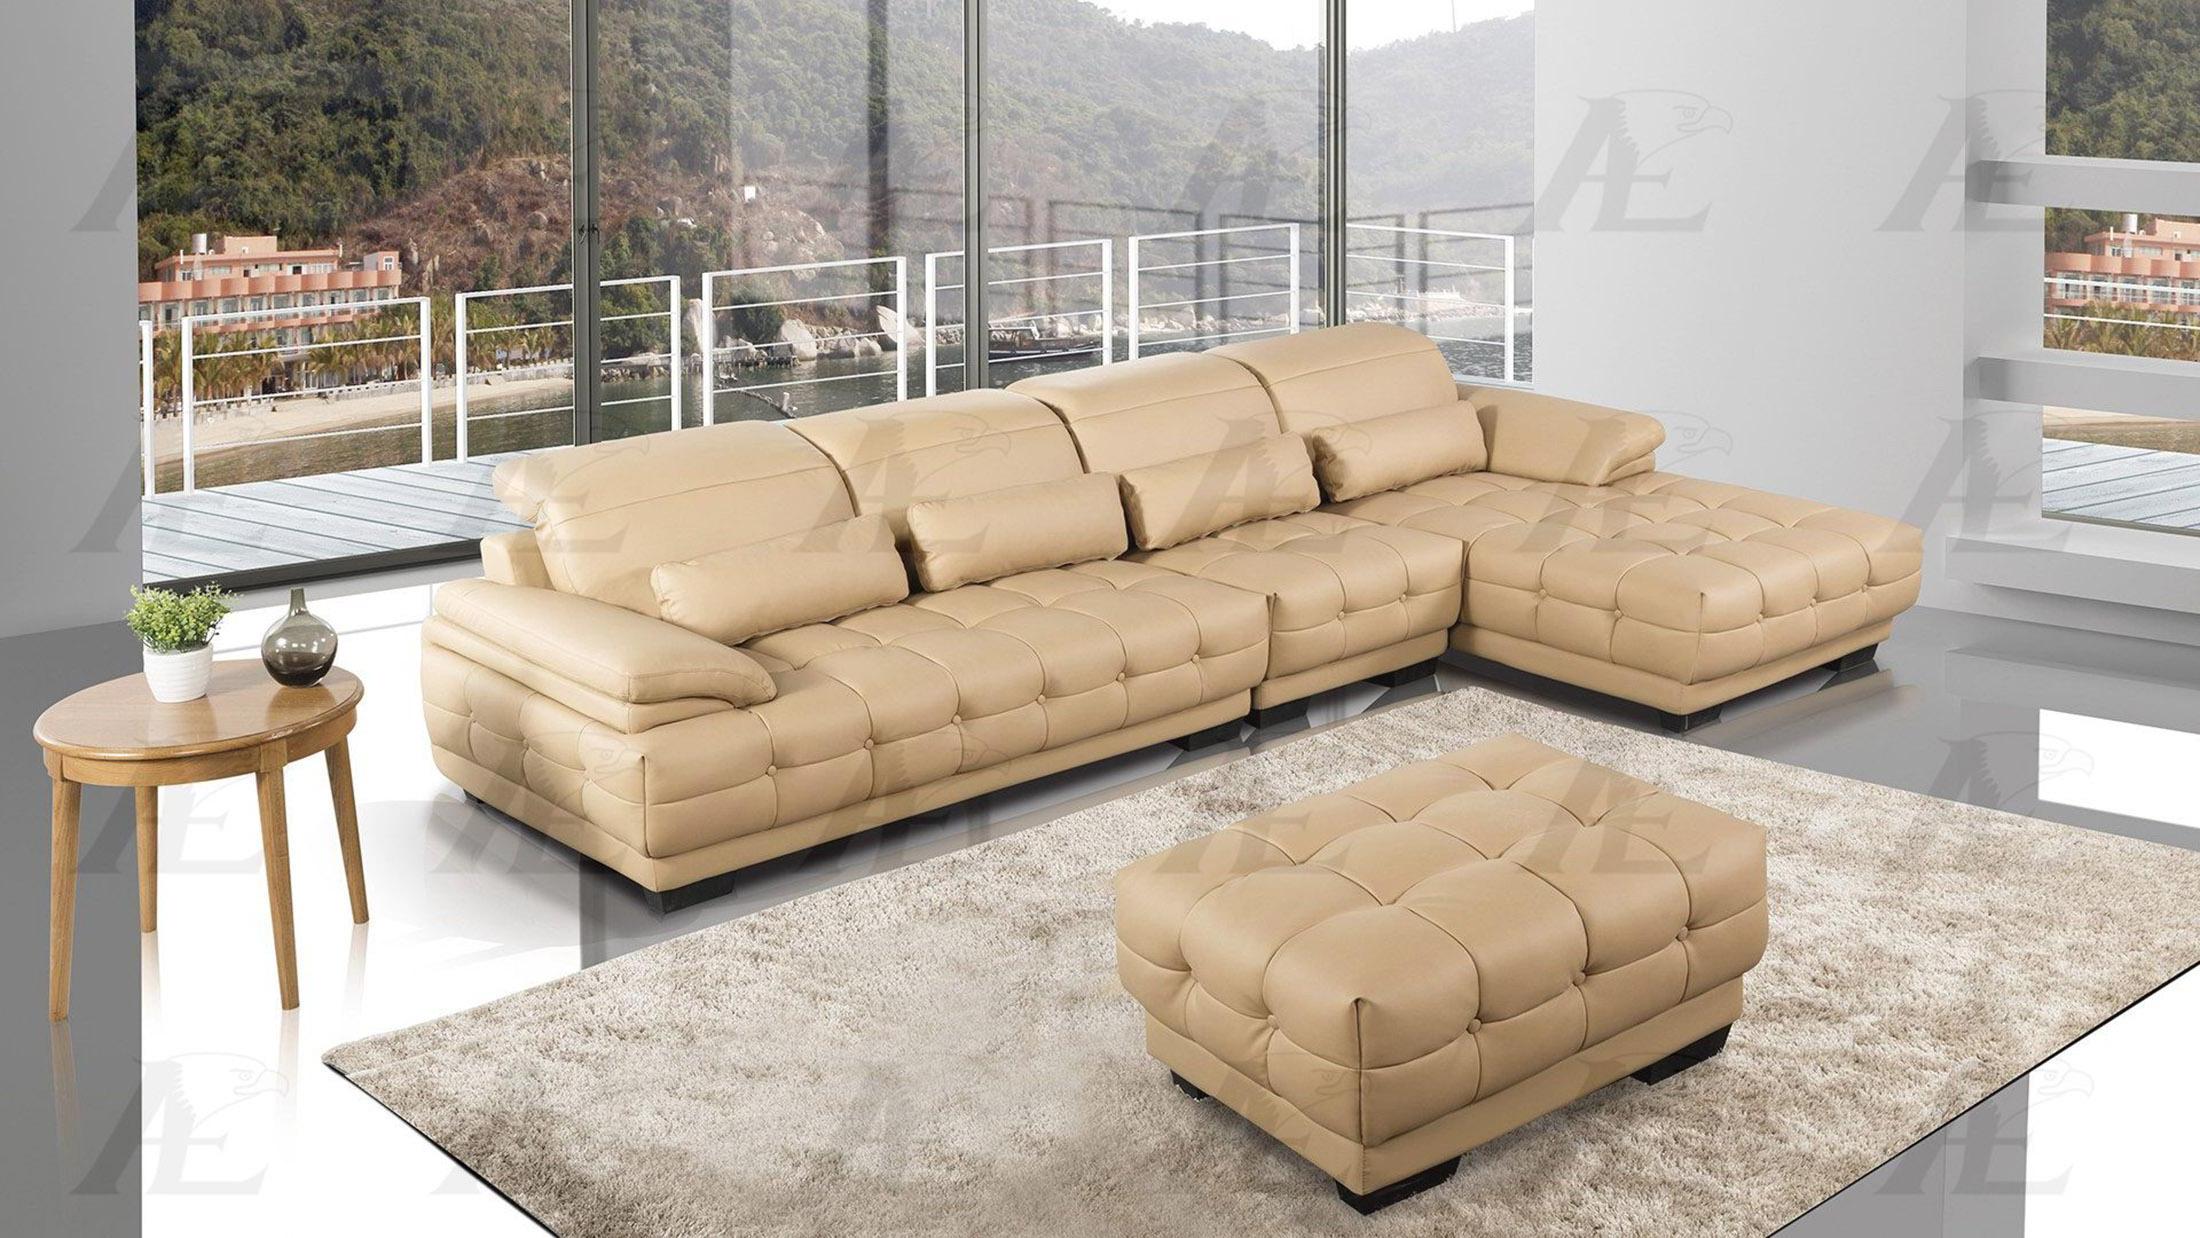 Modern Sofa Chaise Chair and Ottoman Set AE-L296-BK AE-L296-CA Set-4 RHC in Tan Bonded Leather